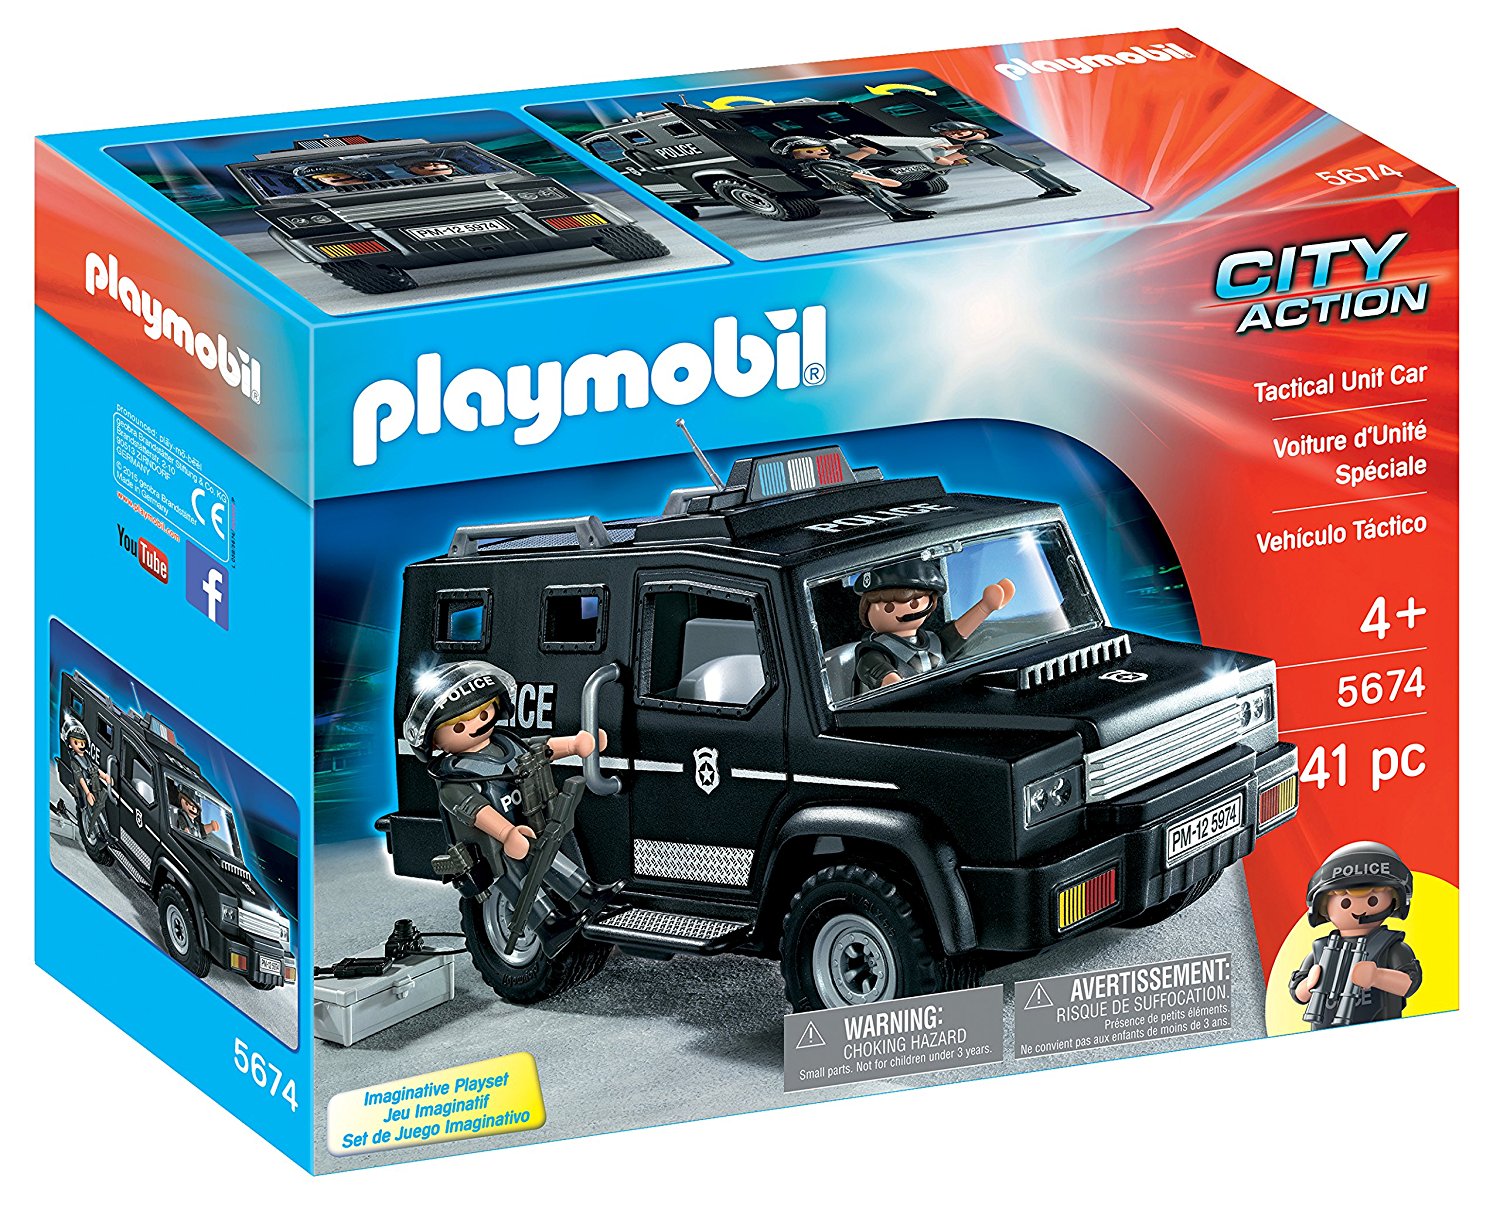 playmobil police van instructions